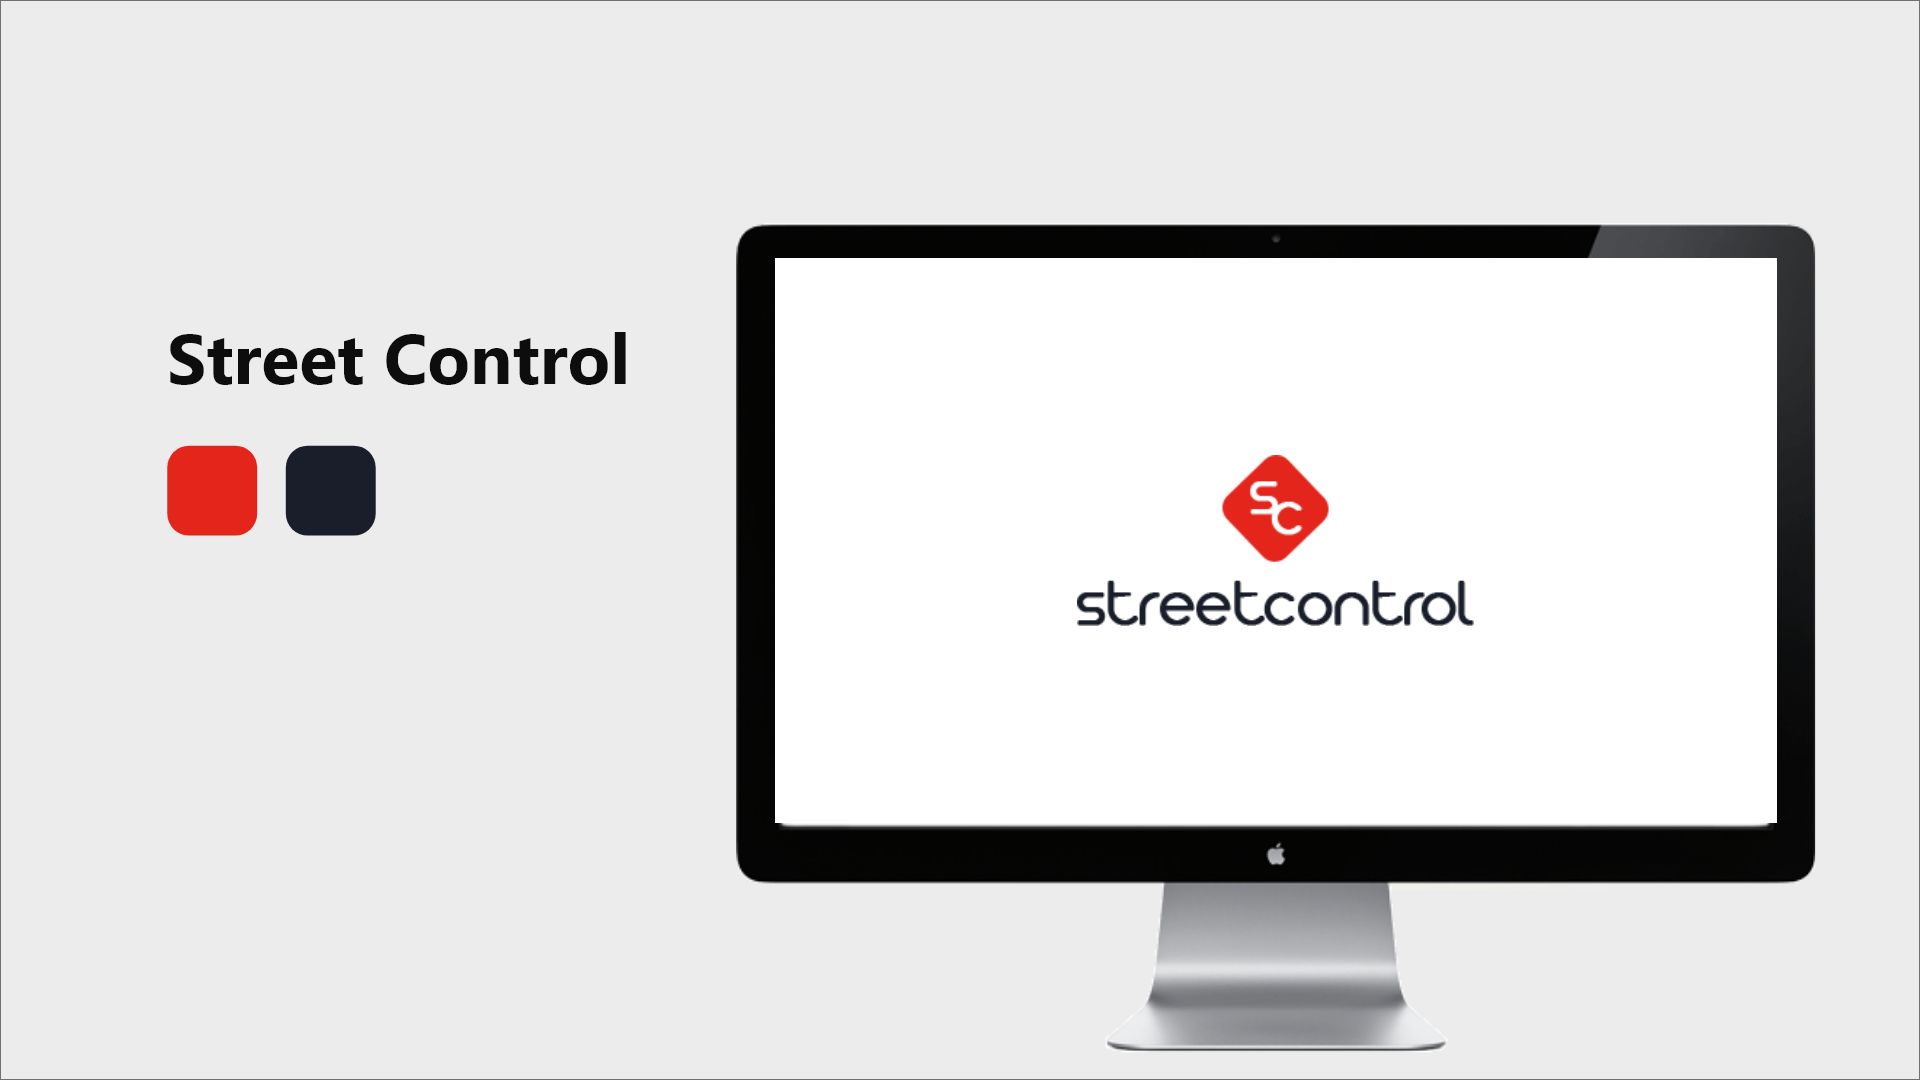 Street Control